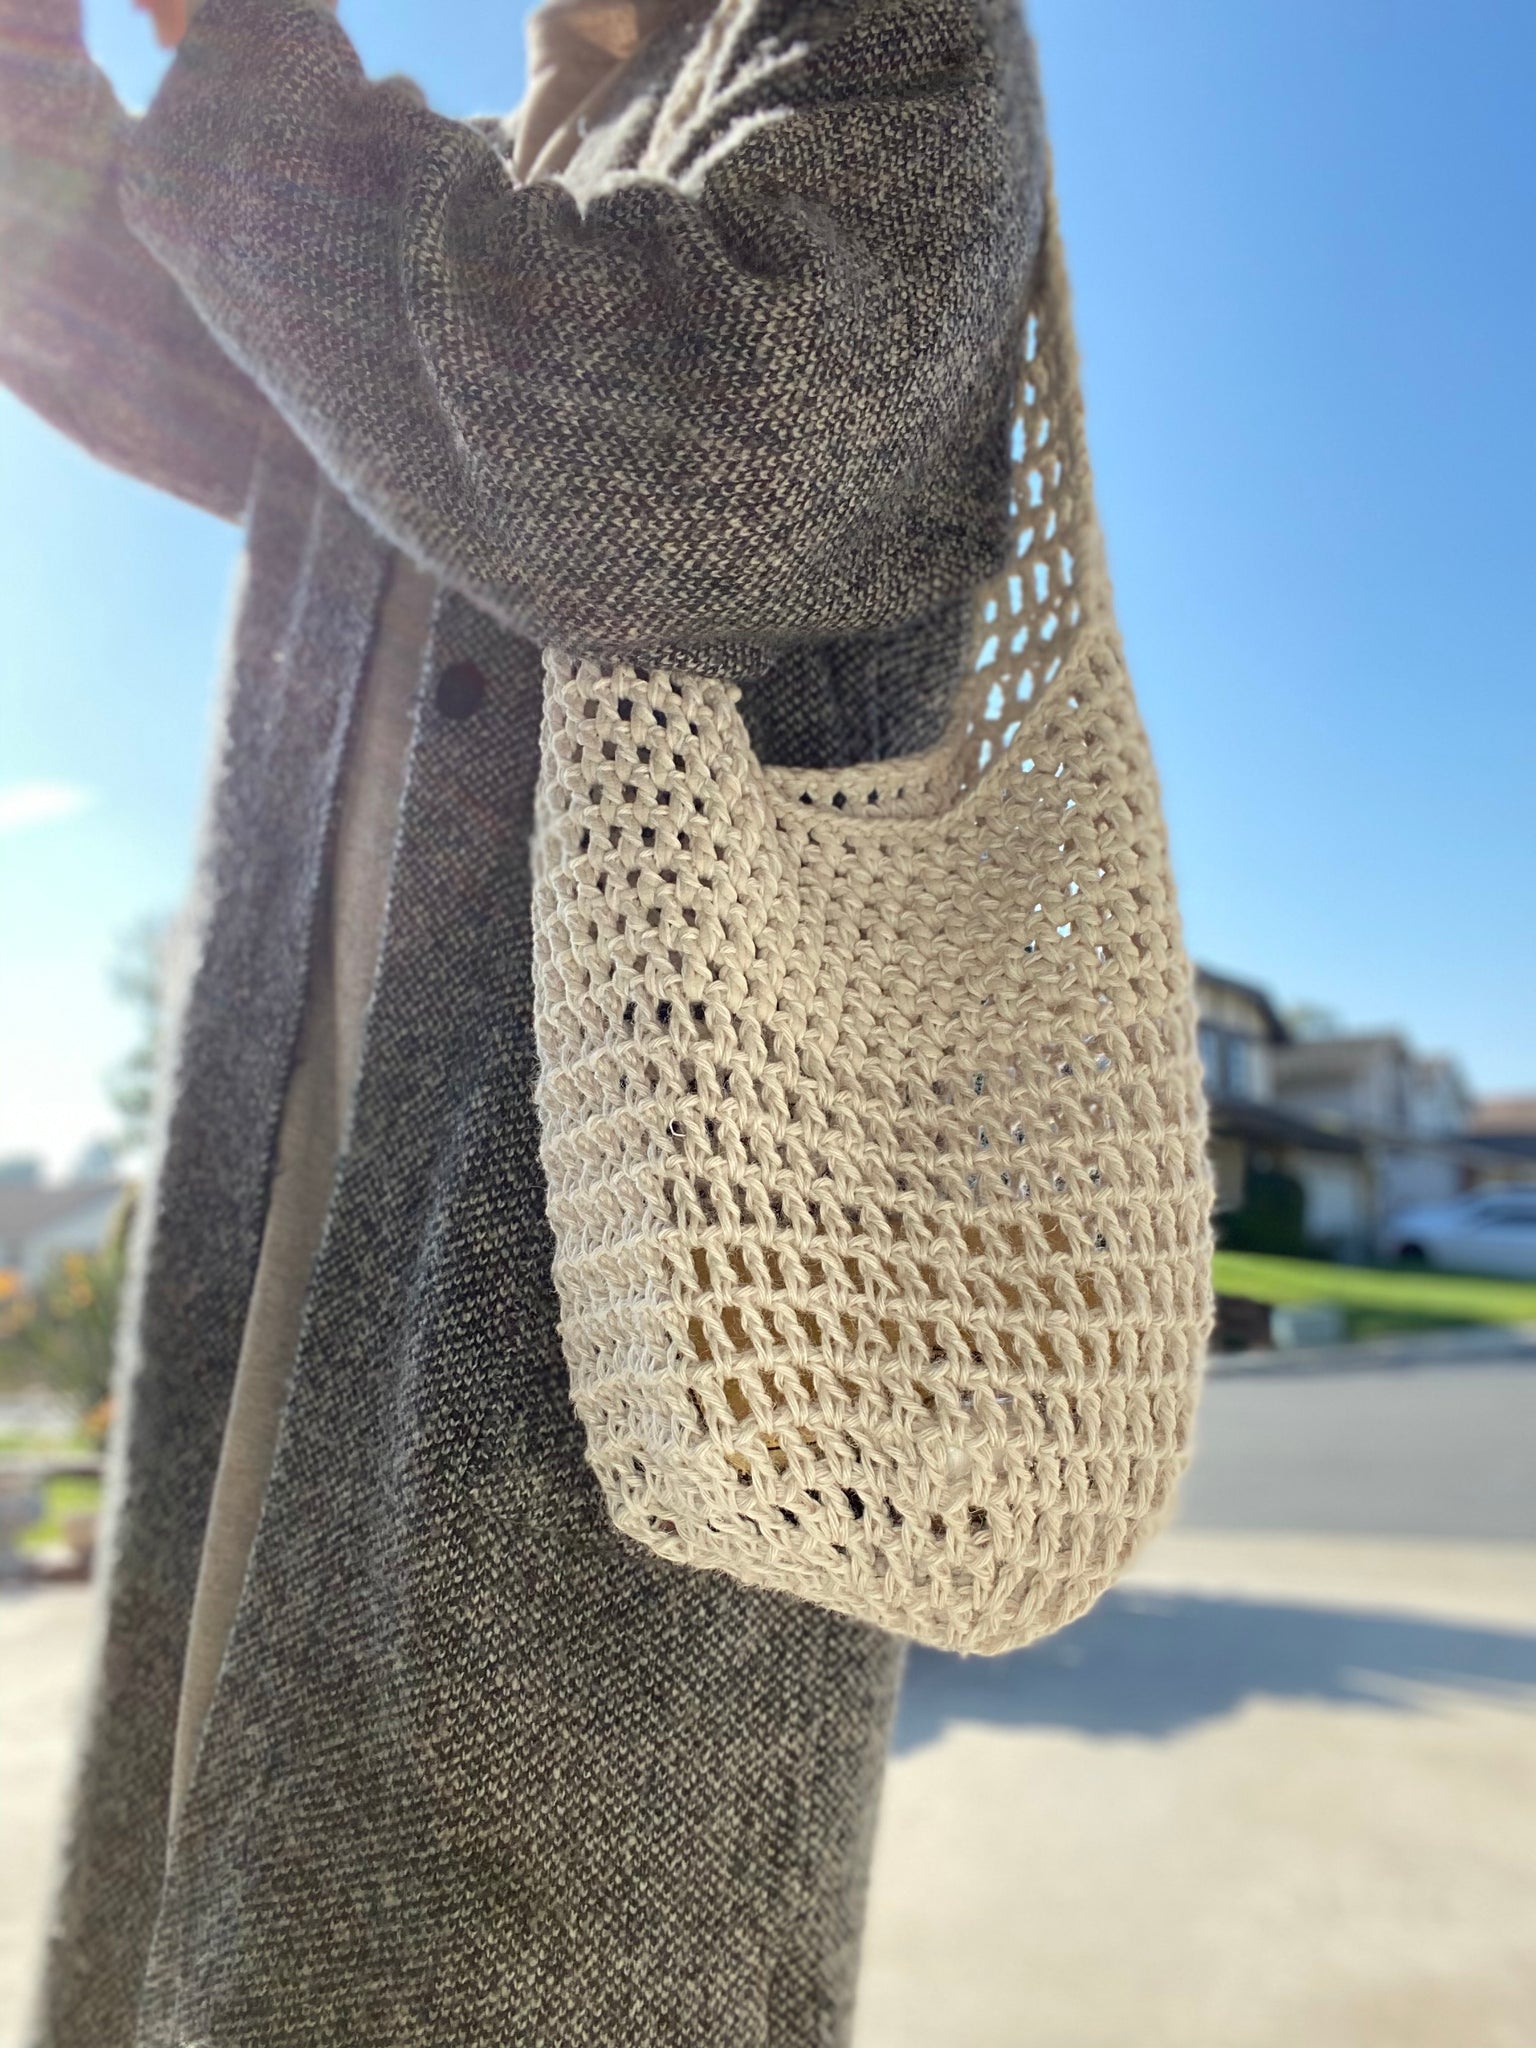 street style net bag